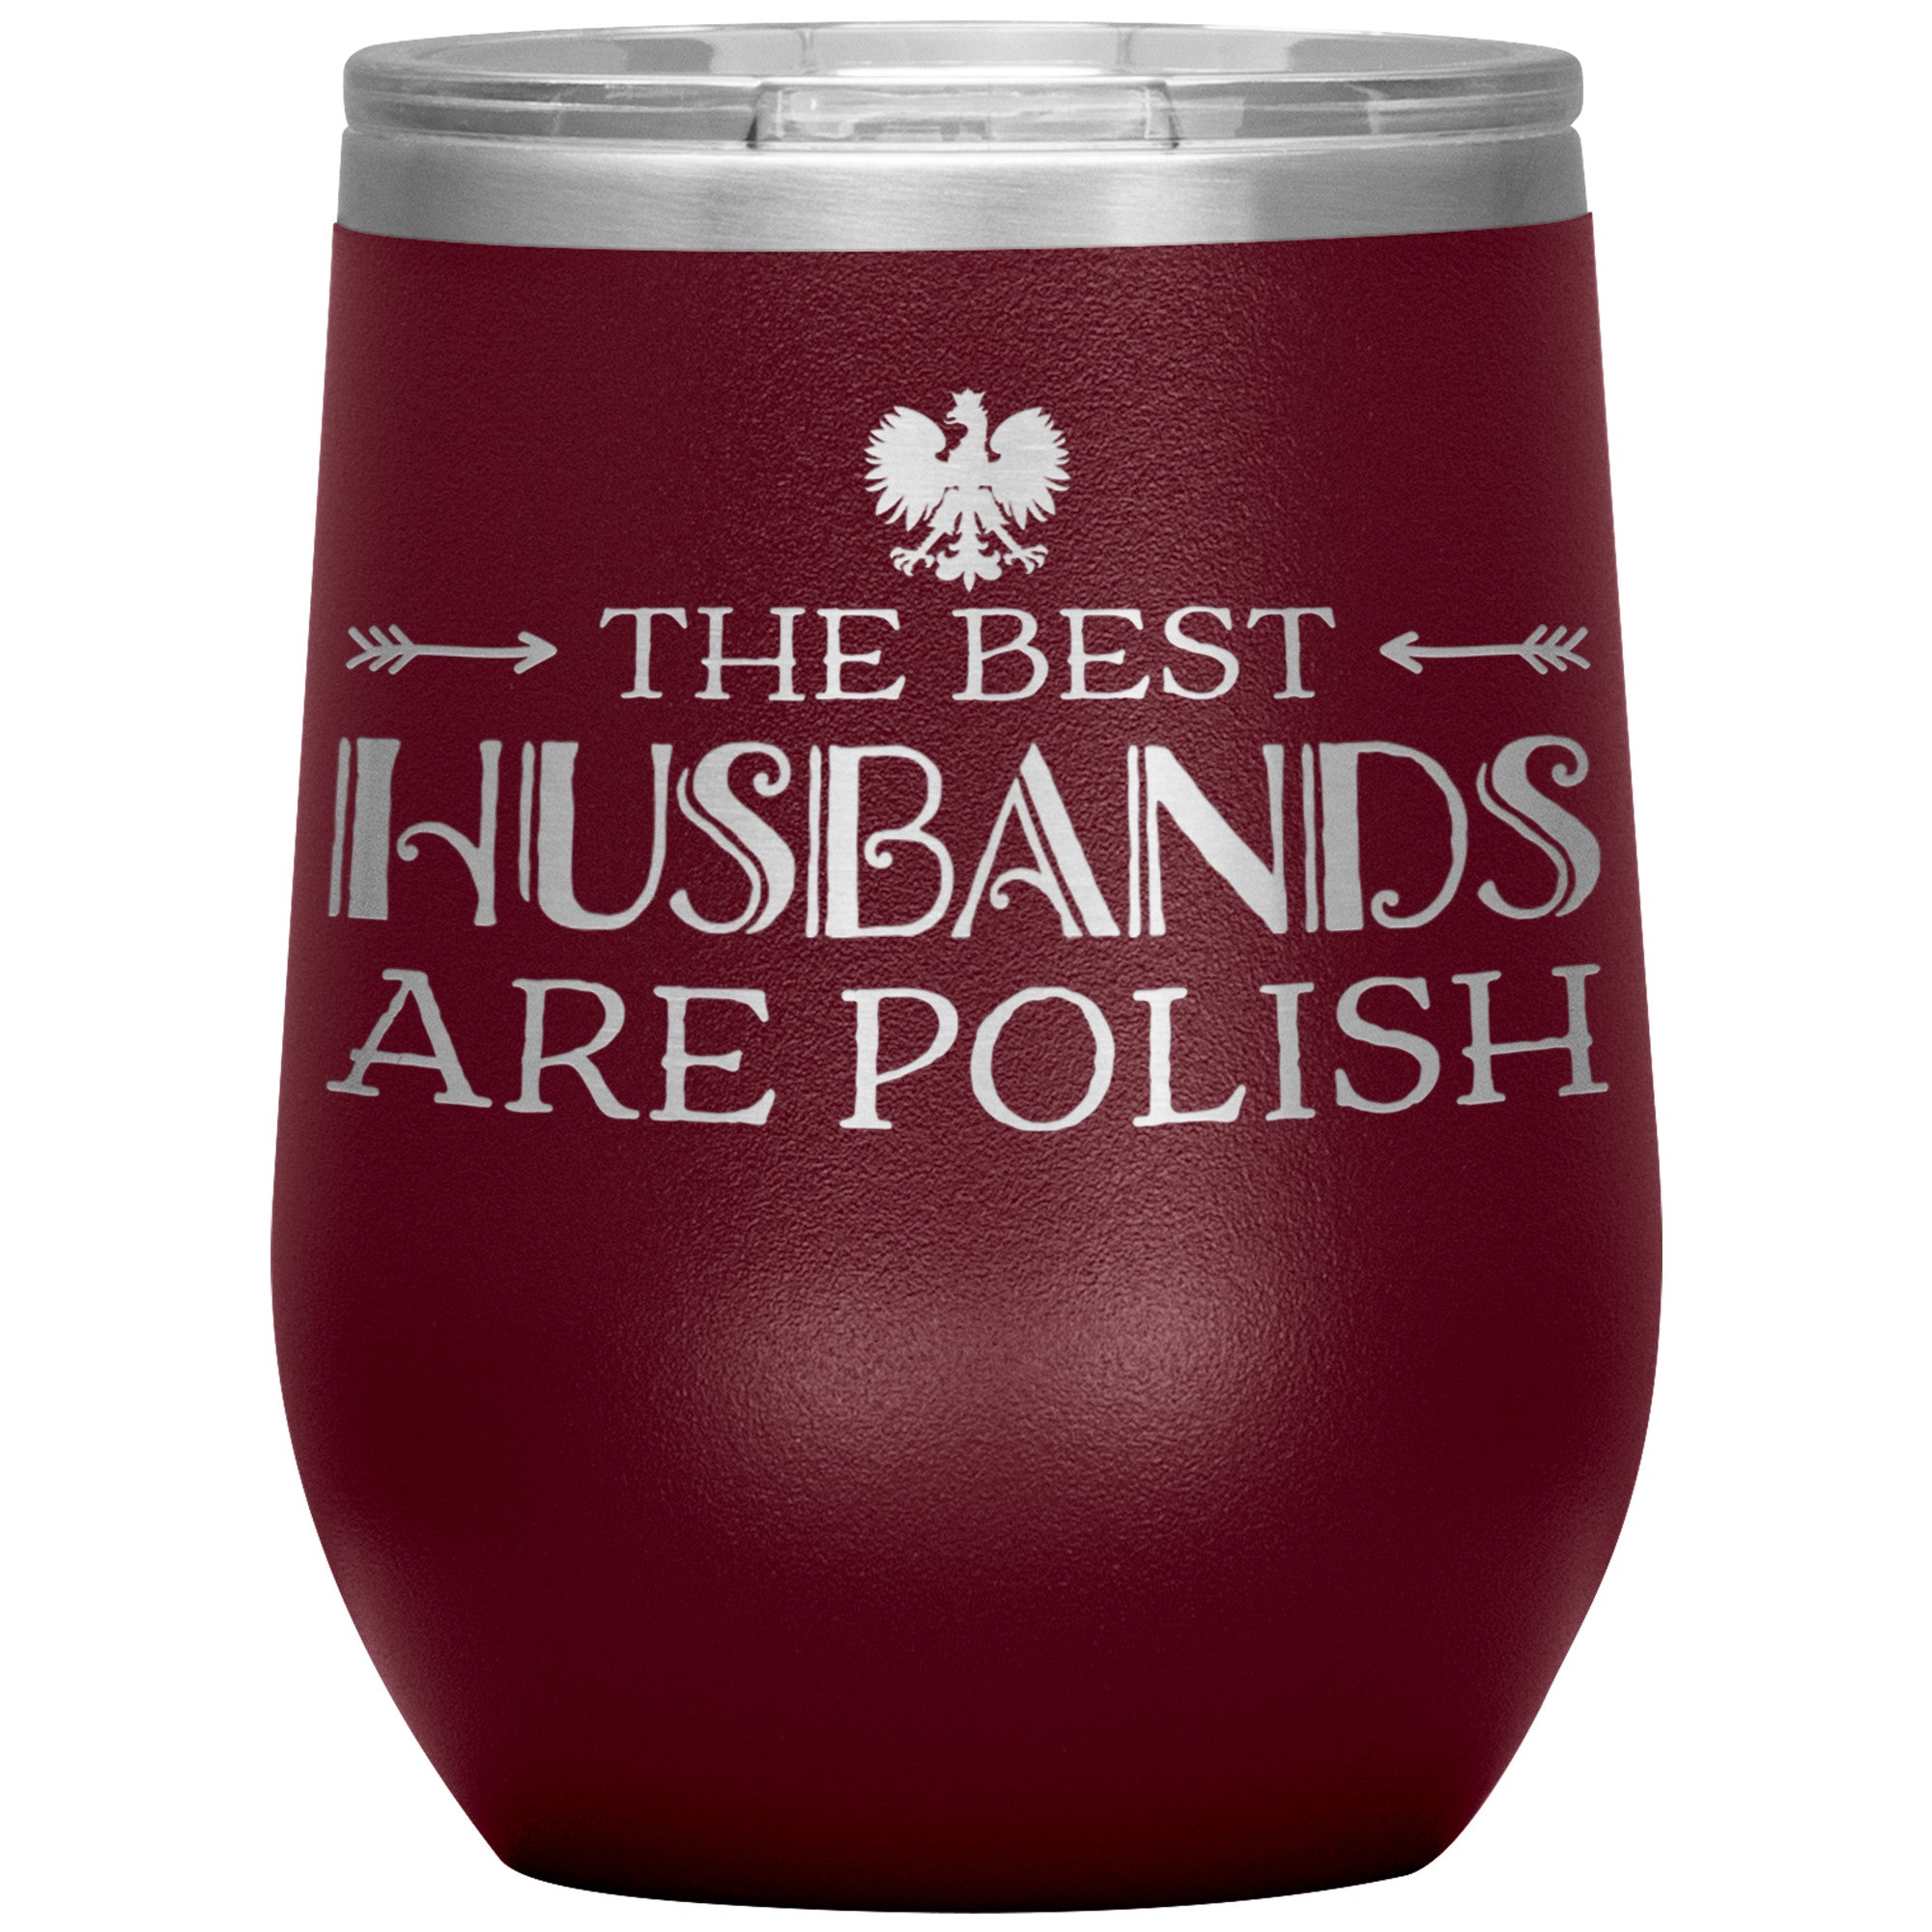 The Best Husbands Are Polish Insulated Wine Tumbler Tumblers teelaunch Maroon  